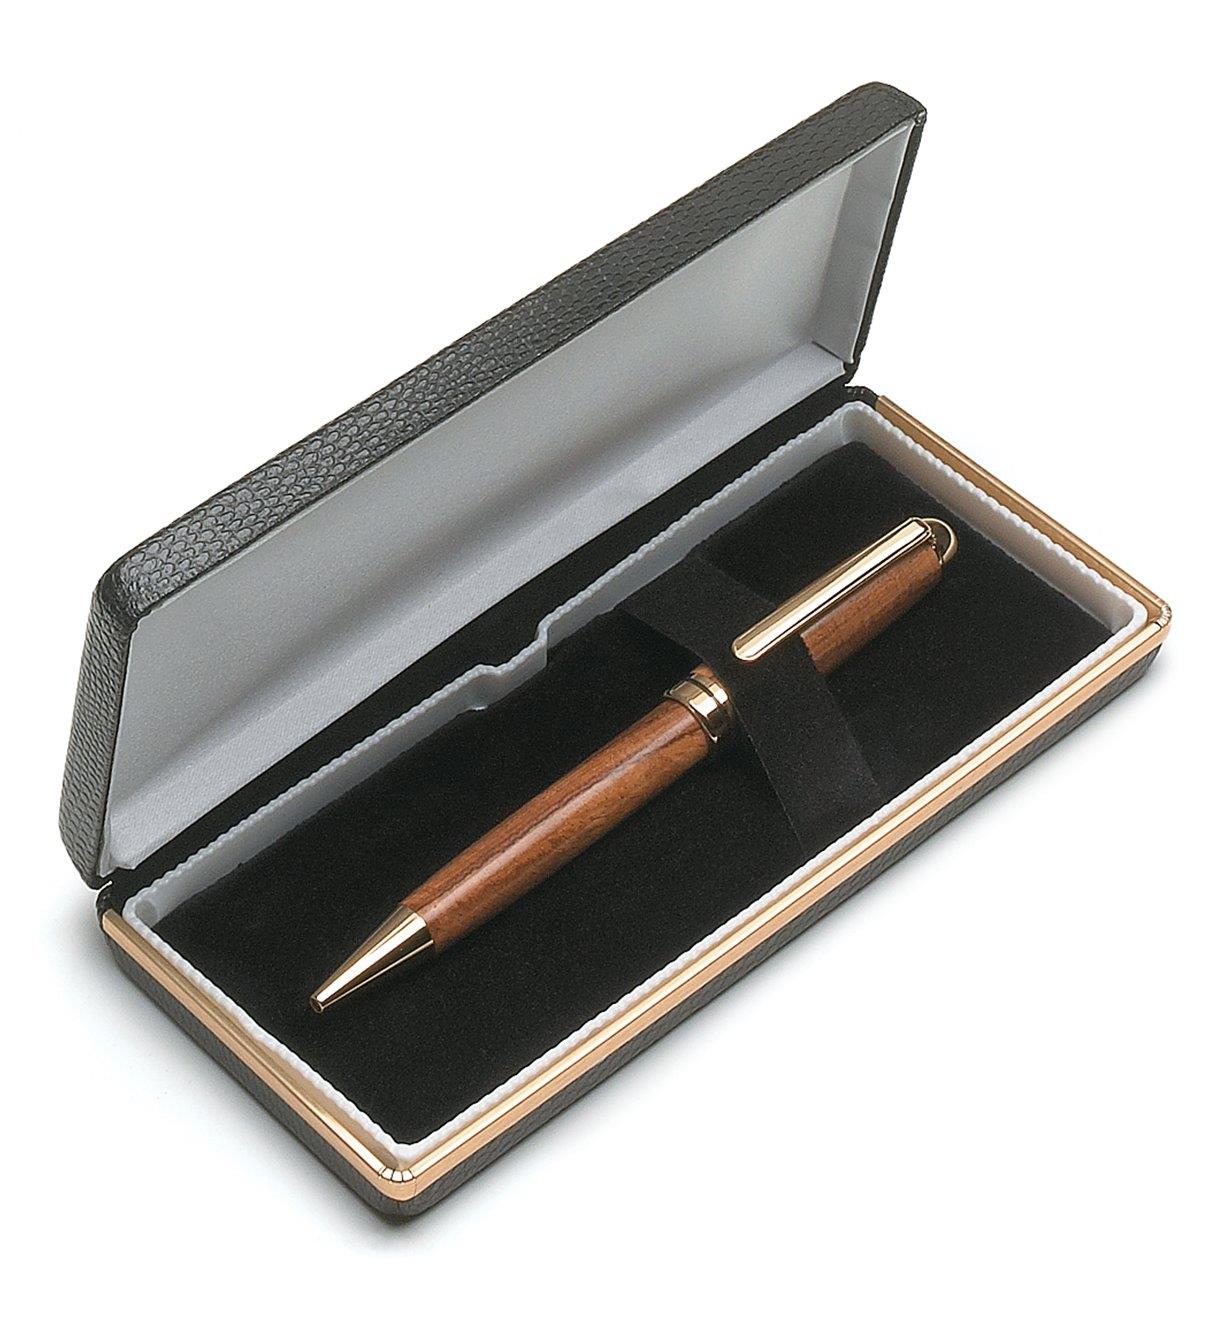 Leatherette case holding a wooden pen